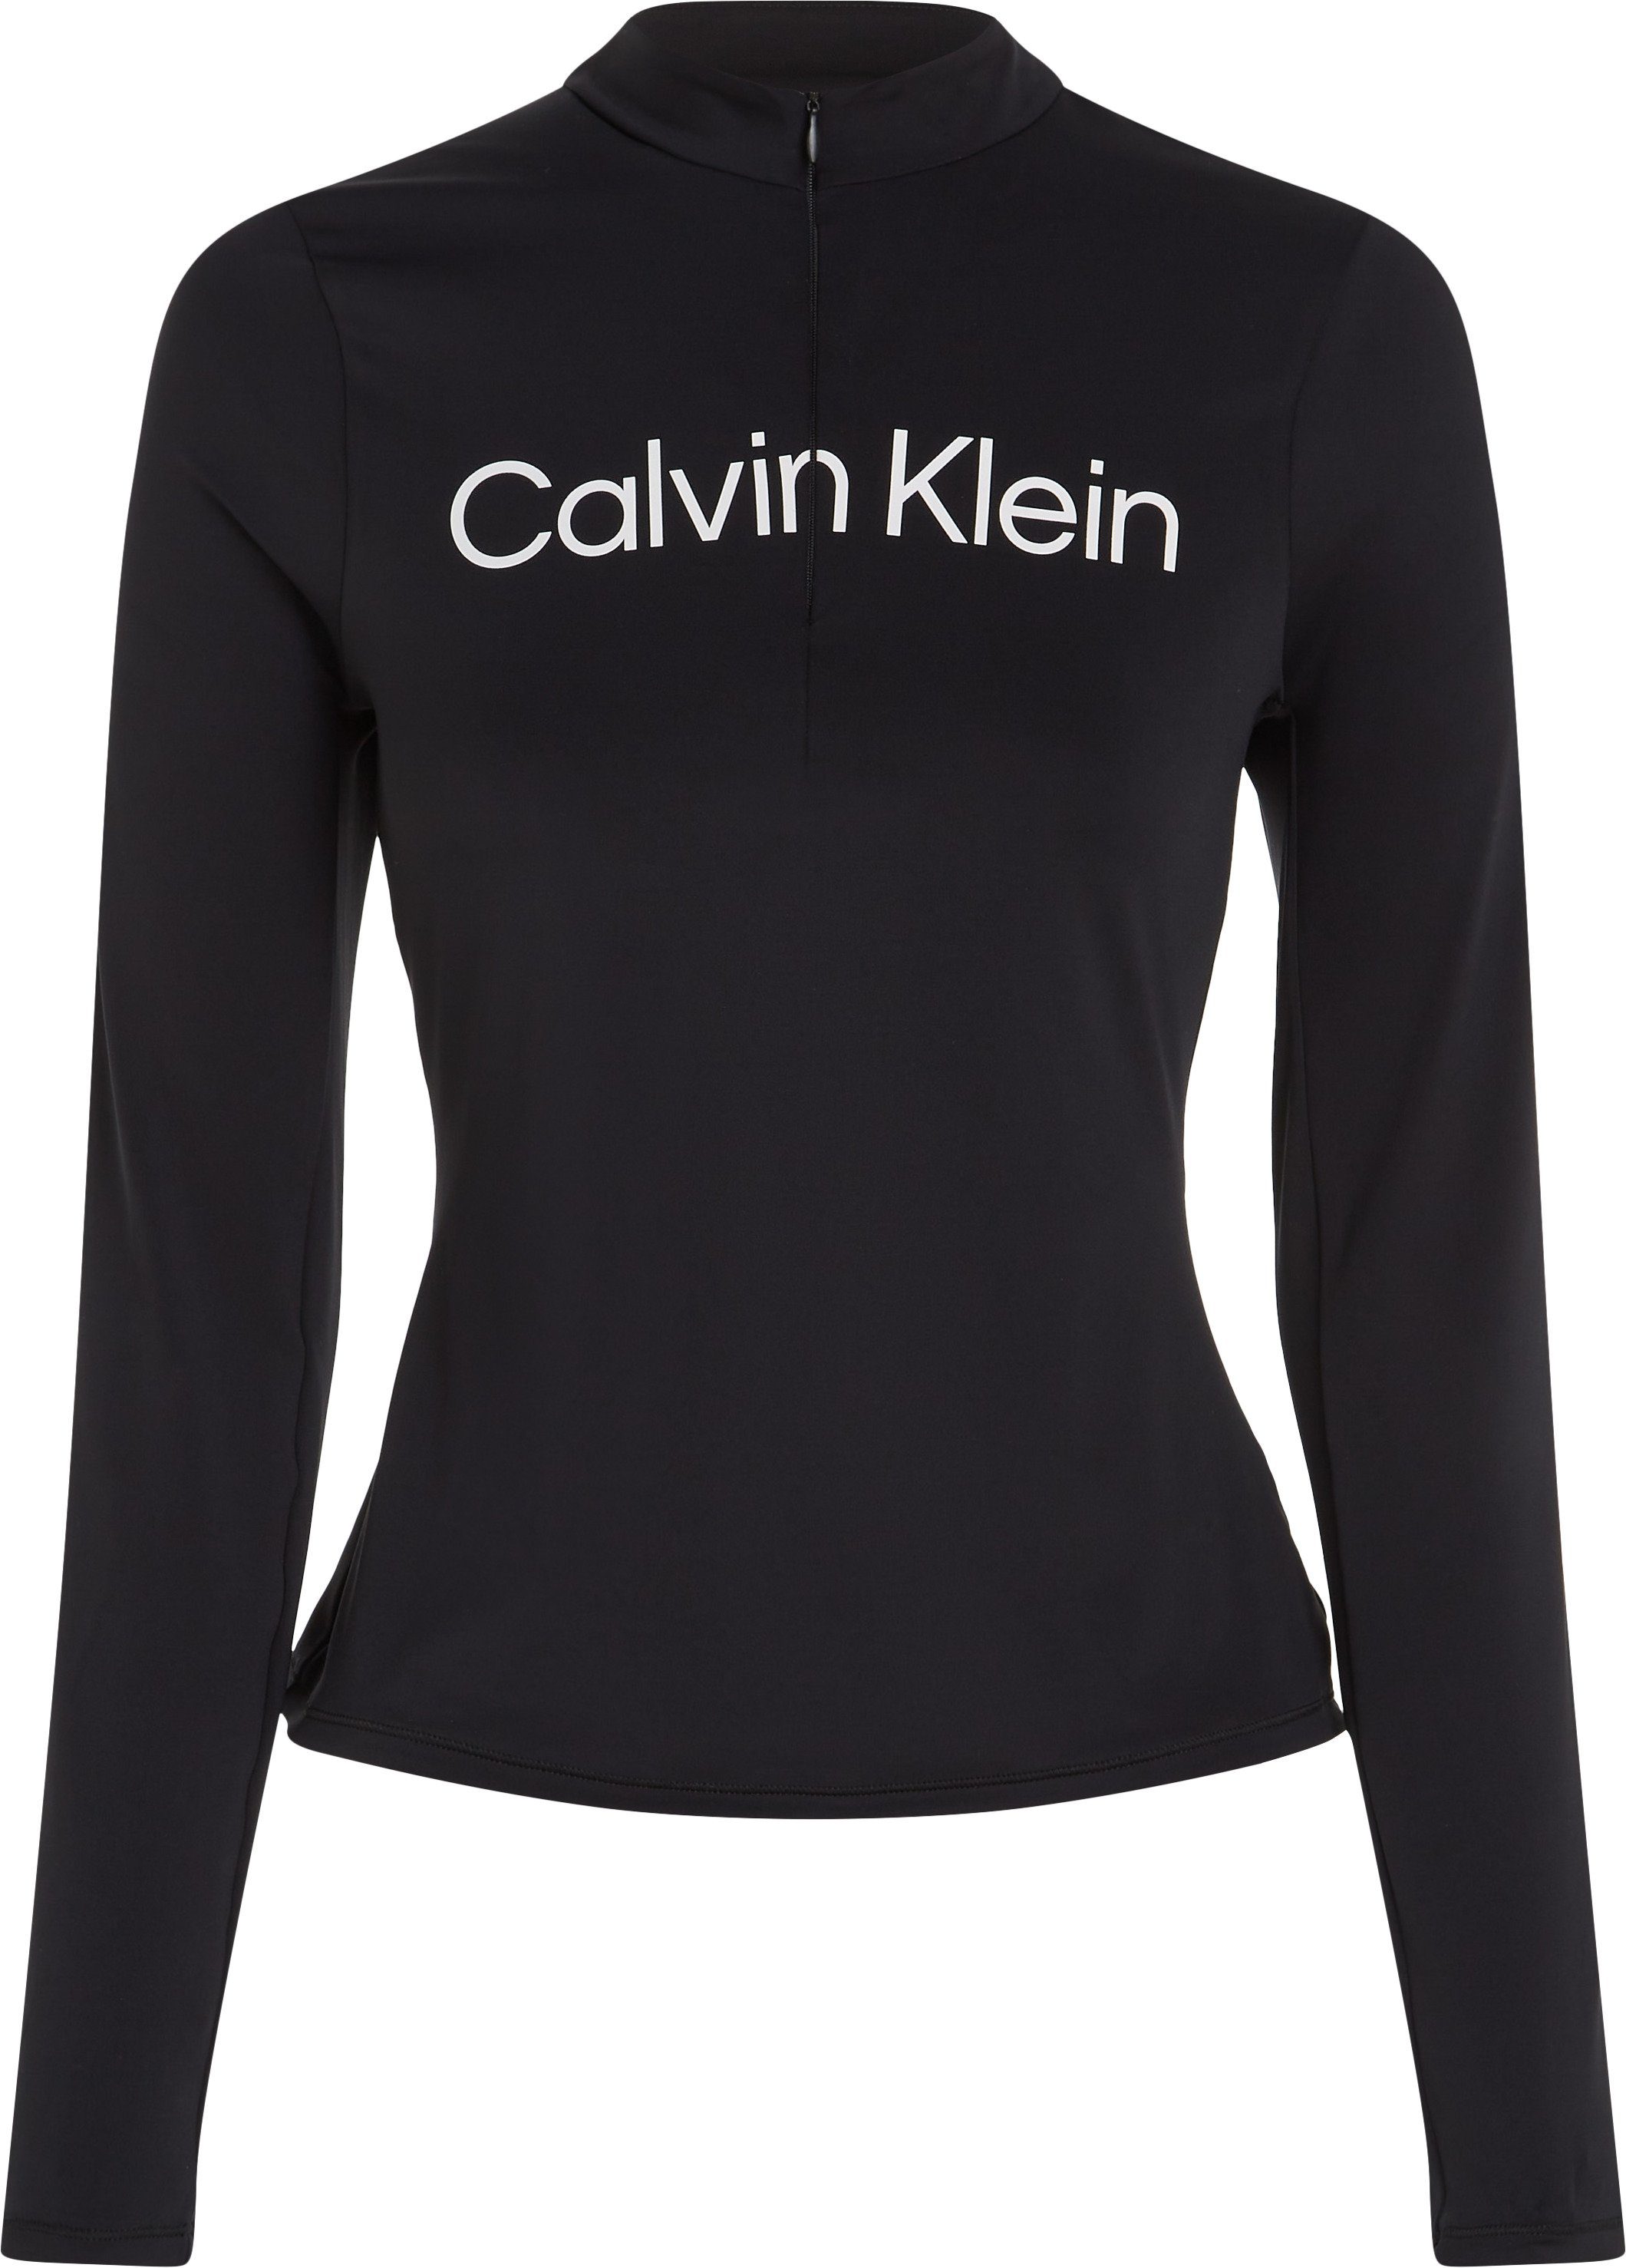 Calvin Sport - Klein Langarmshirt Top LS WO